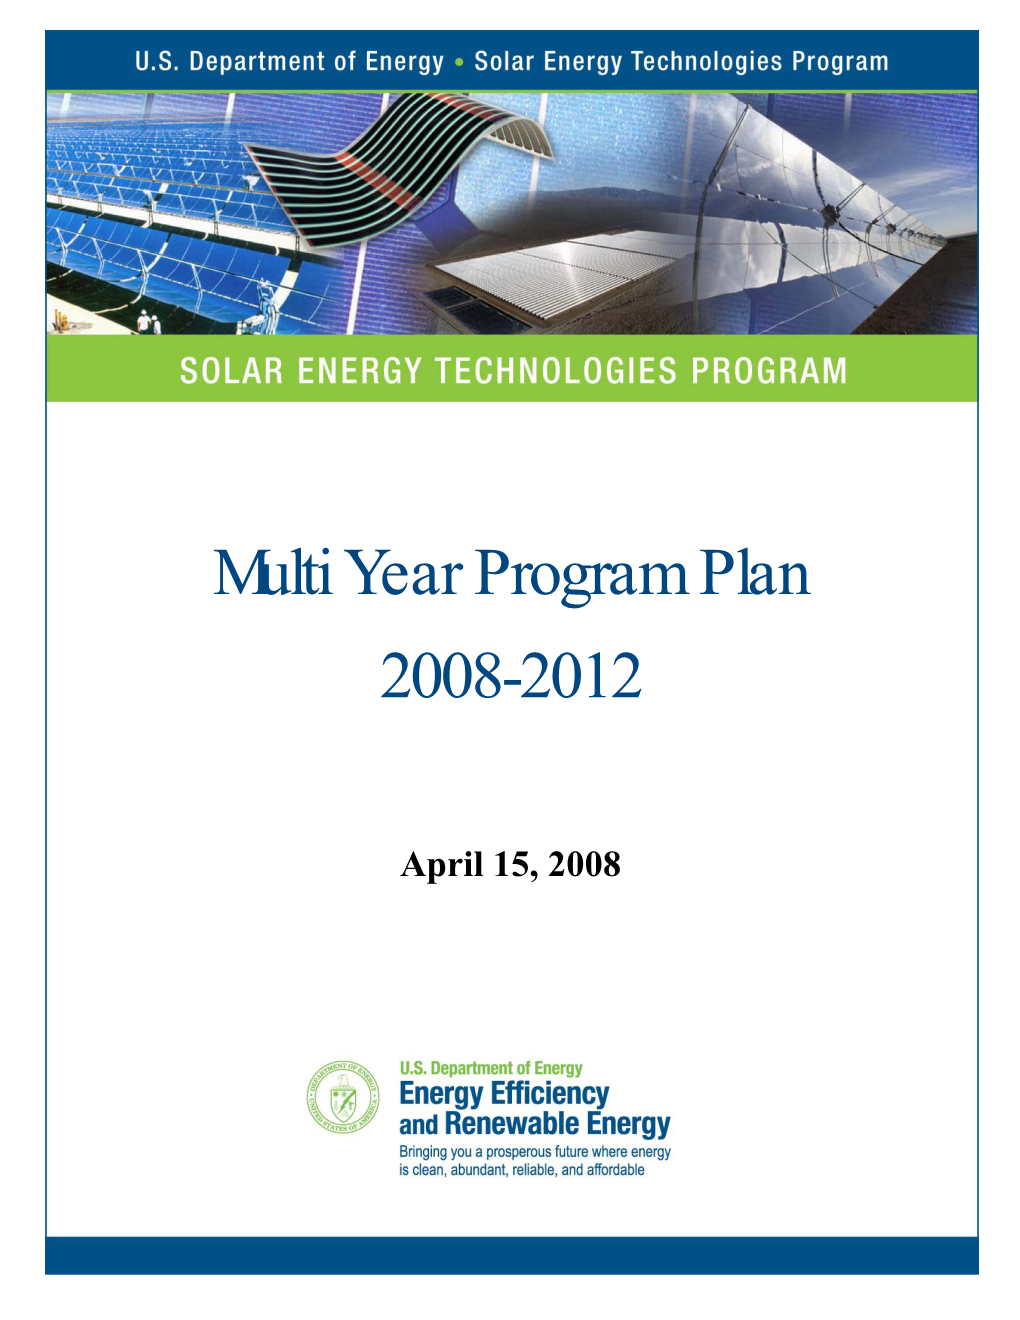 Solar Energy Technologies Program Multi-Year Program Plan: 2008-2012